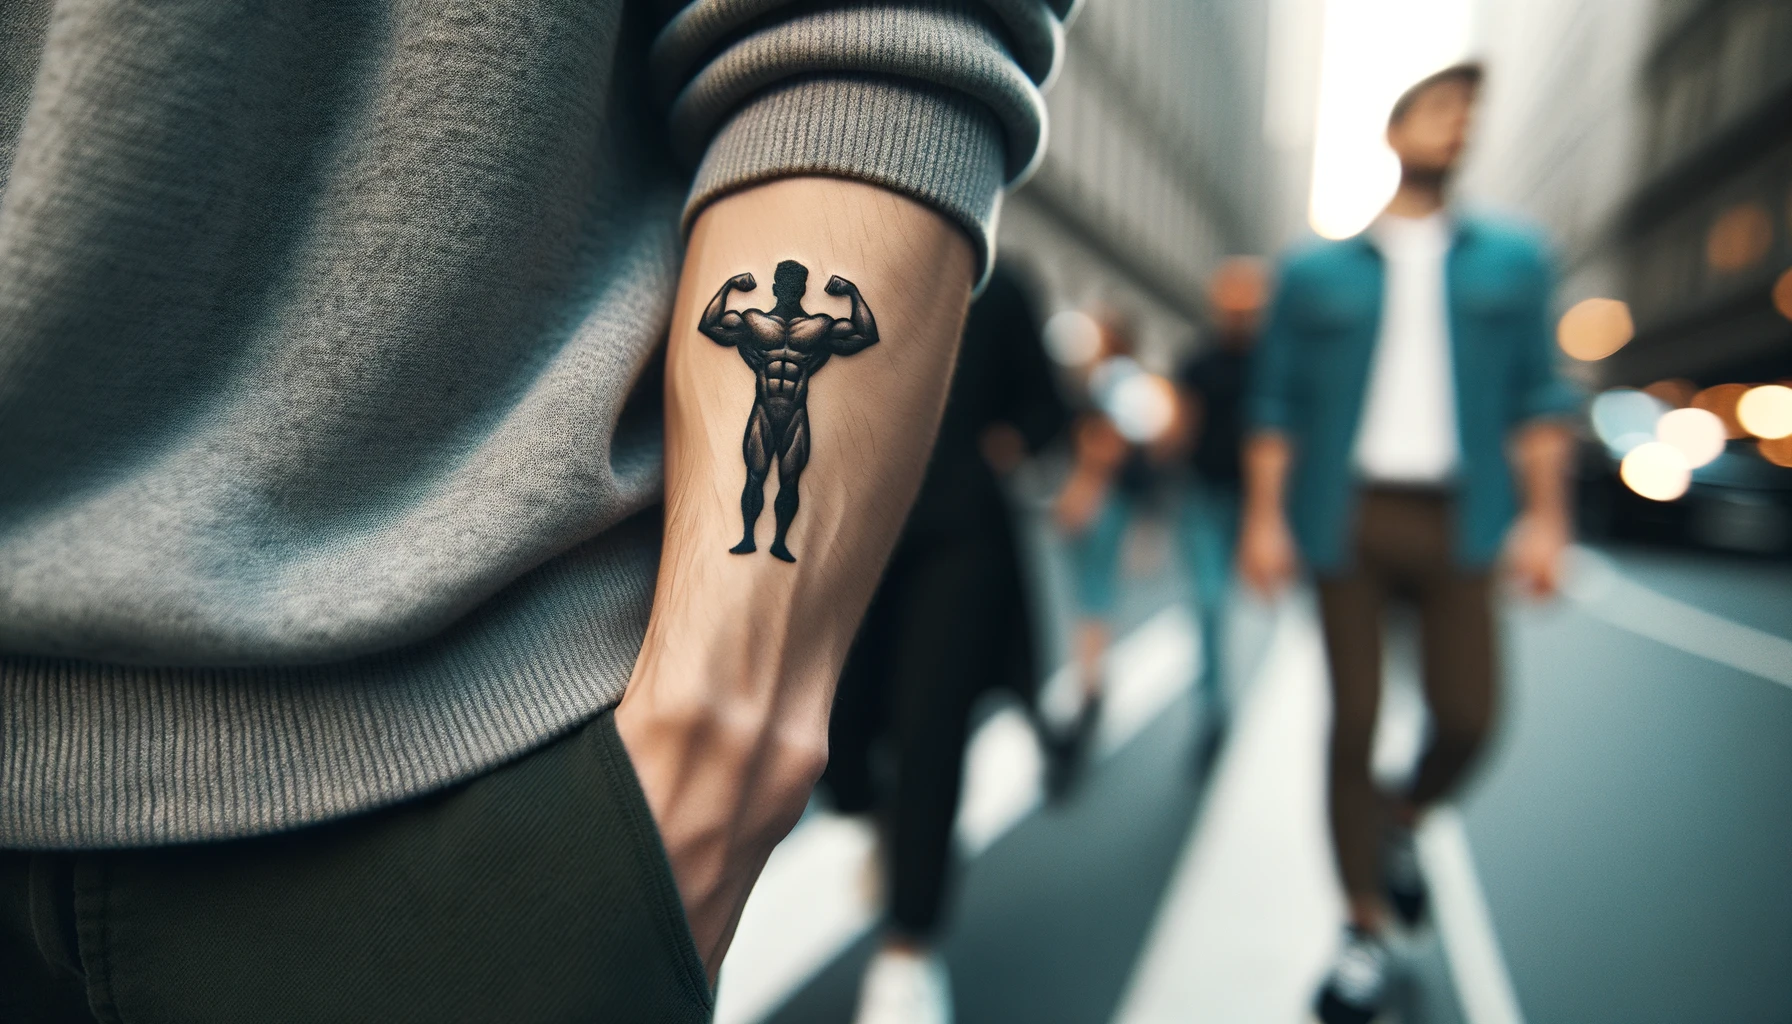 Tatuaż symbolizujący siłę męską